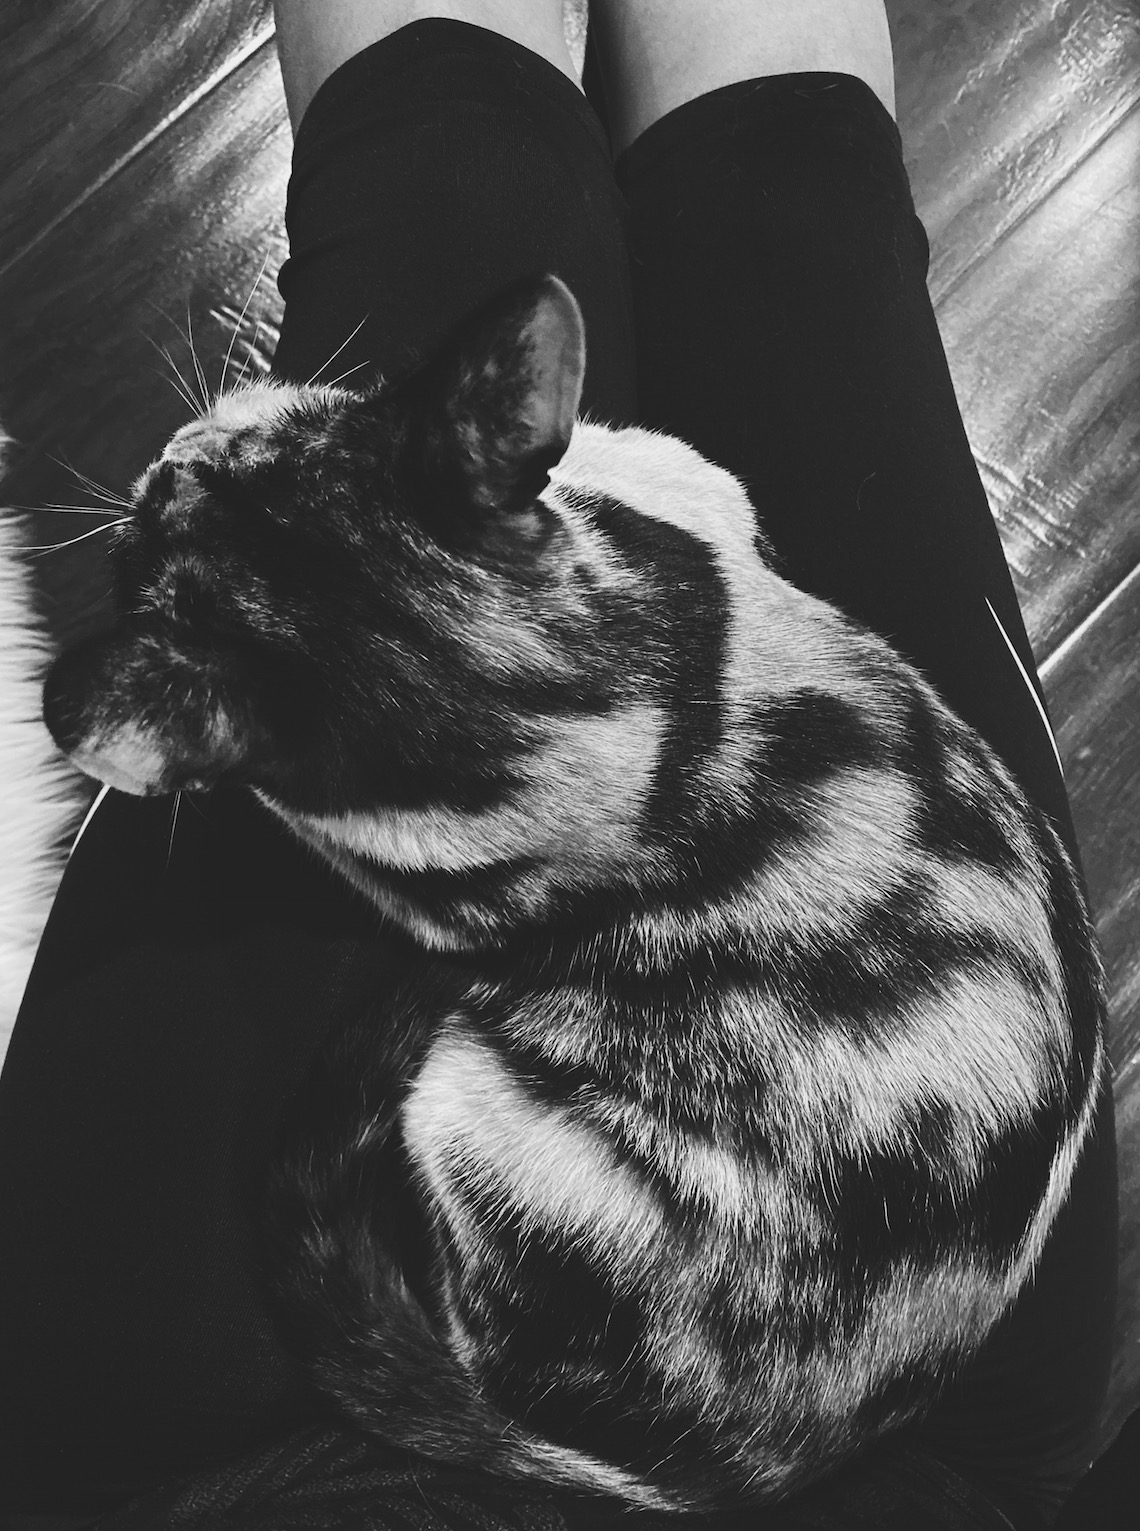 cat in lap-black and white photo-feline good social club-lcm